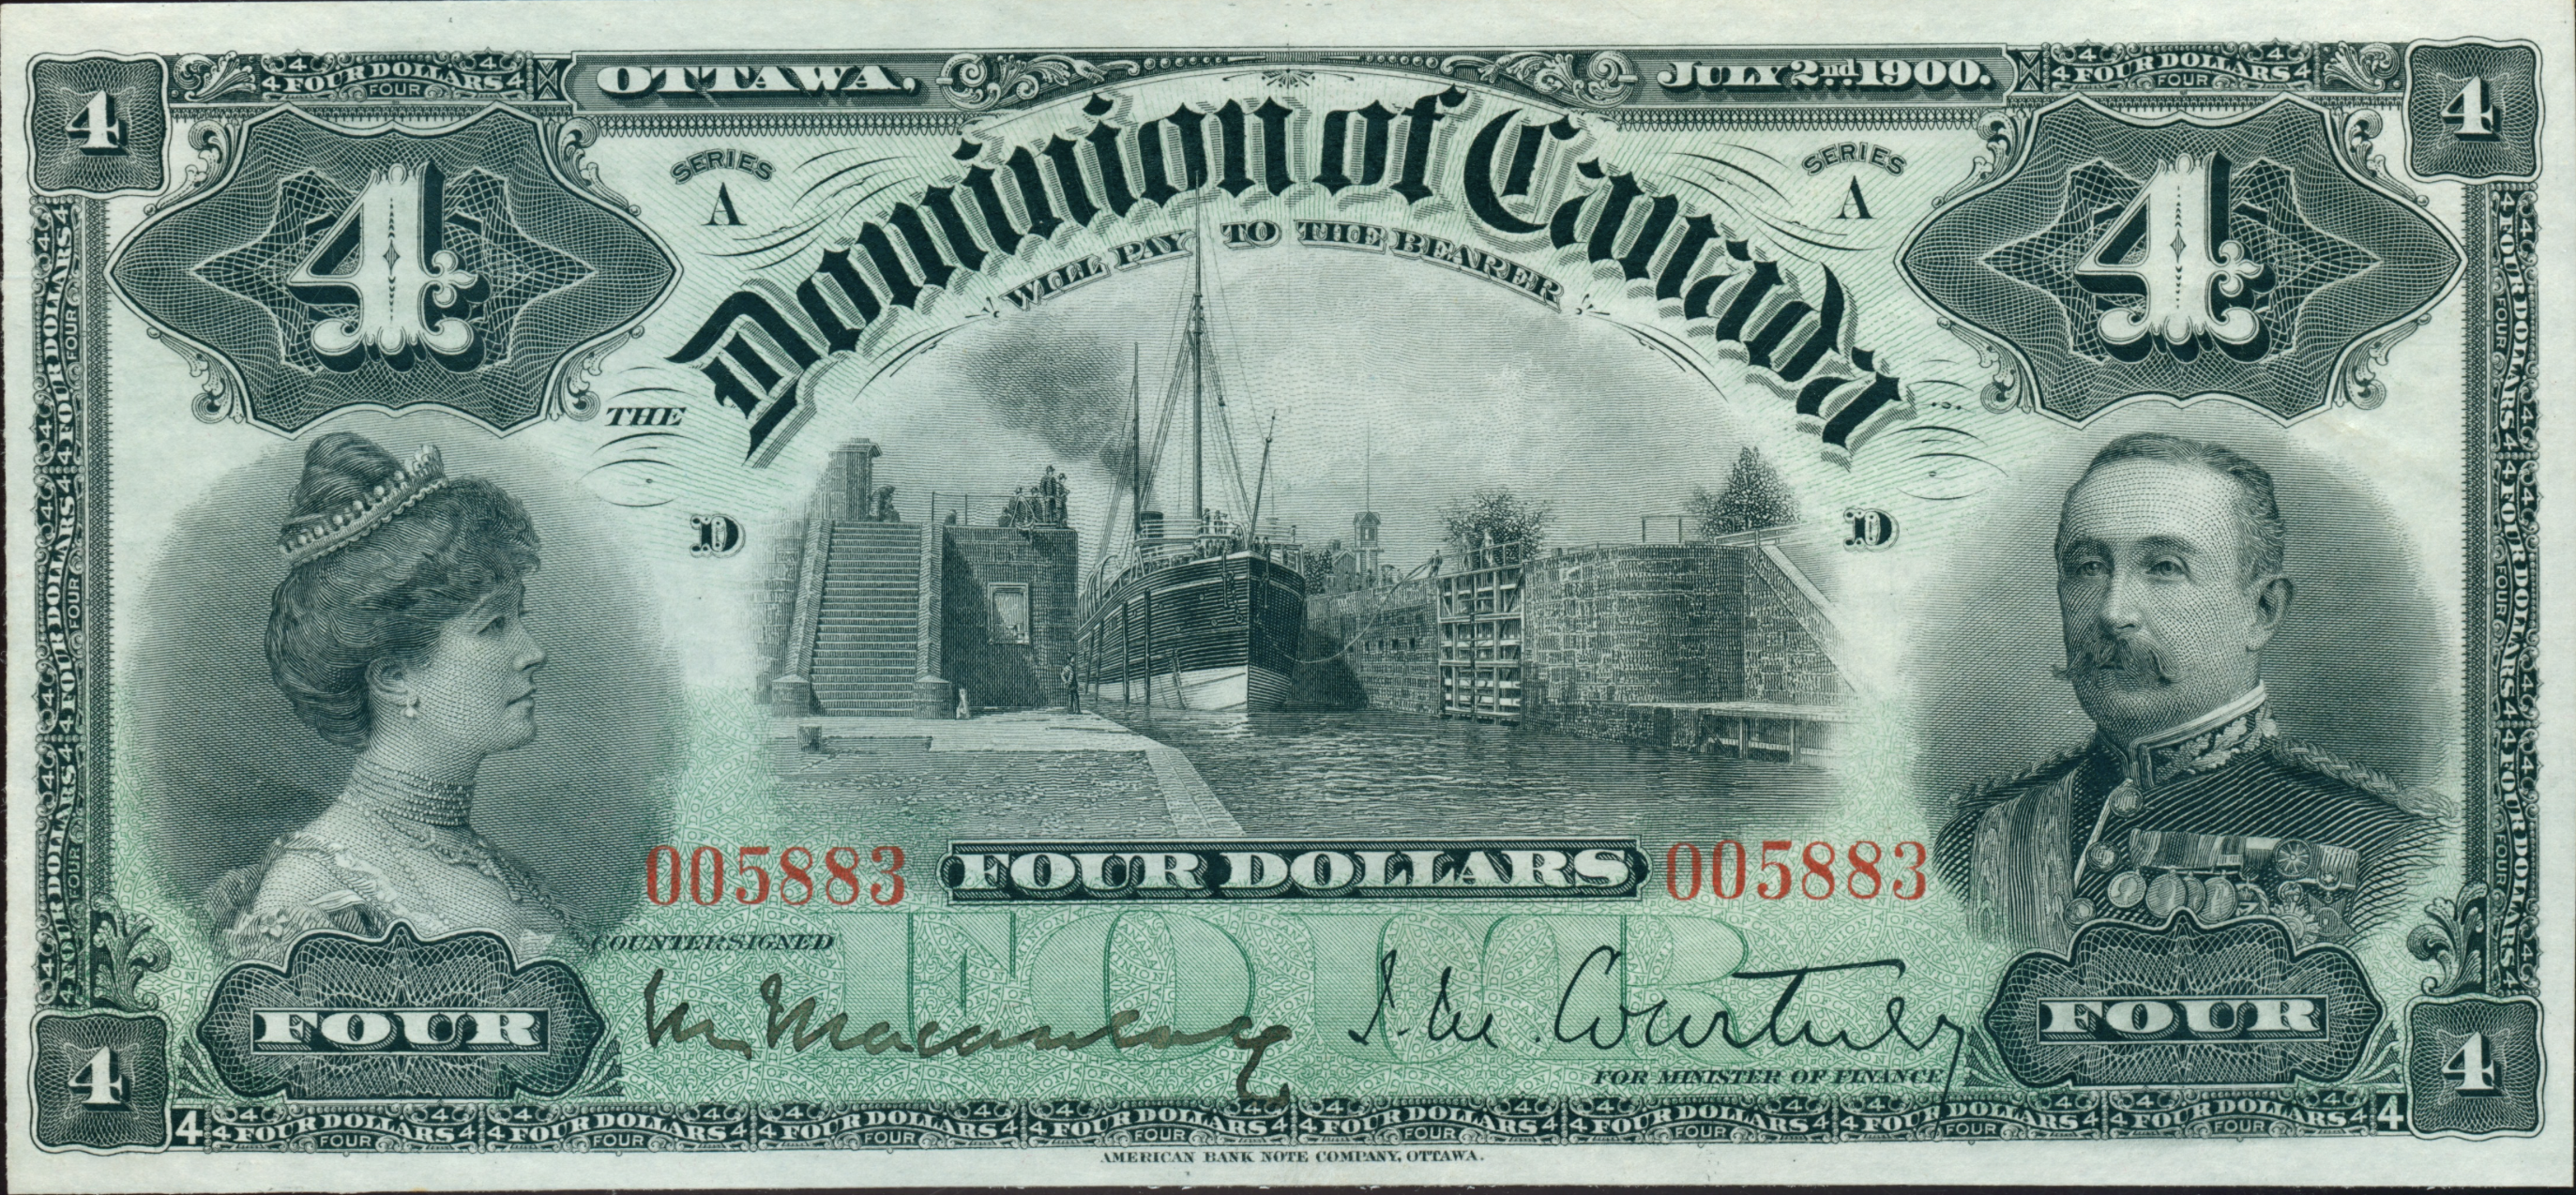 Доллар 1900 года. Доллар купюра. Старые банкноты США.